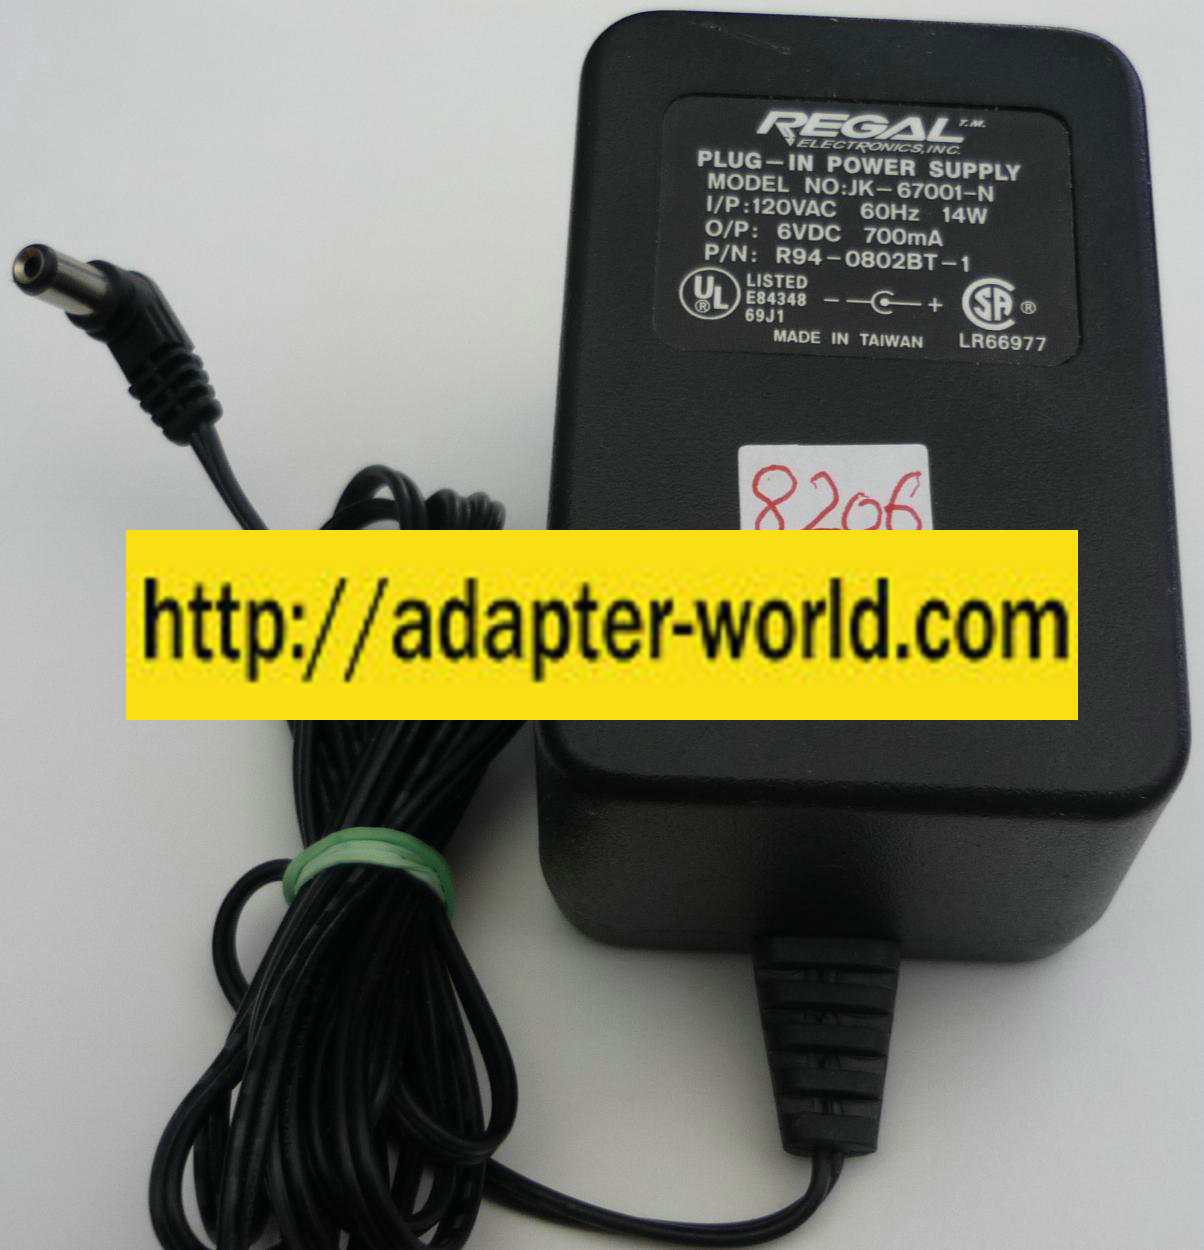 REGAL ELECTRONICS JK-67001-N AC ADAPTER 6VDC 700mA NEW -( ) 2x5